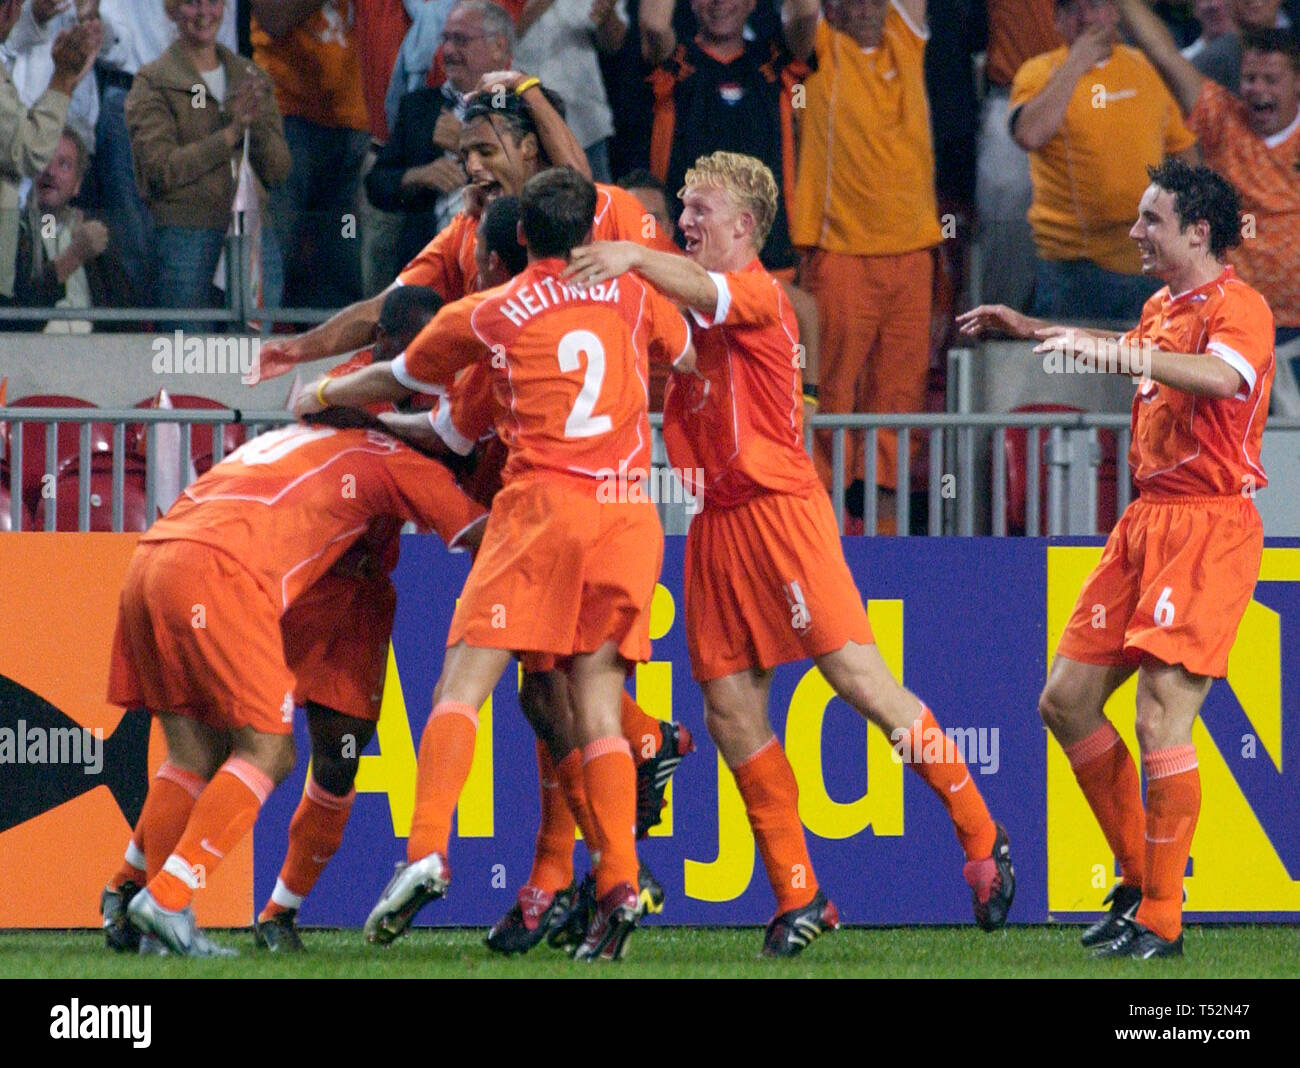 amsterdam-arena-netherlands-892004-football-qualifier-for-the-fifa-world-cup-2006-netherlands-orange-vs-czech-republic-white-20-dutch-team-celebrates-T52N47.jpg